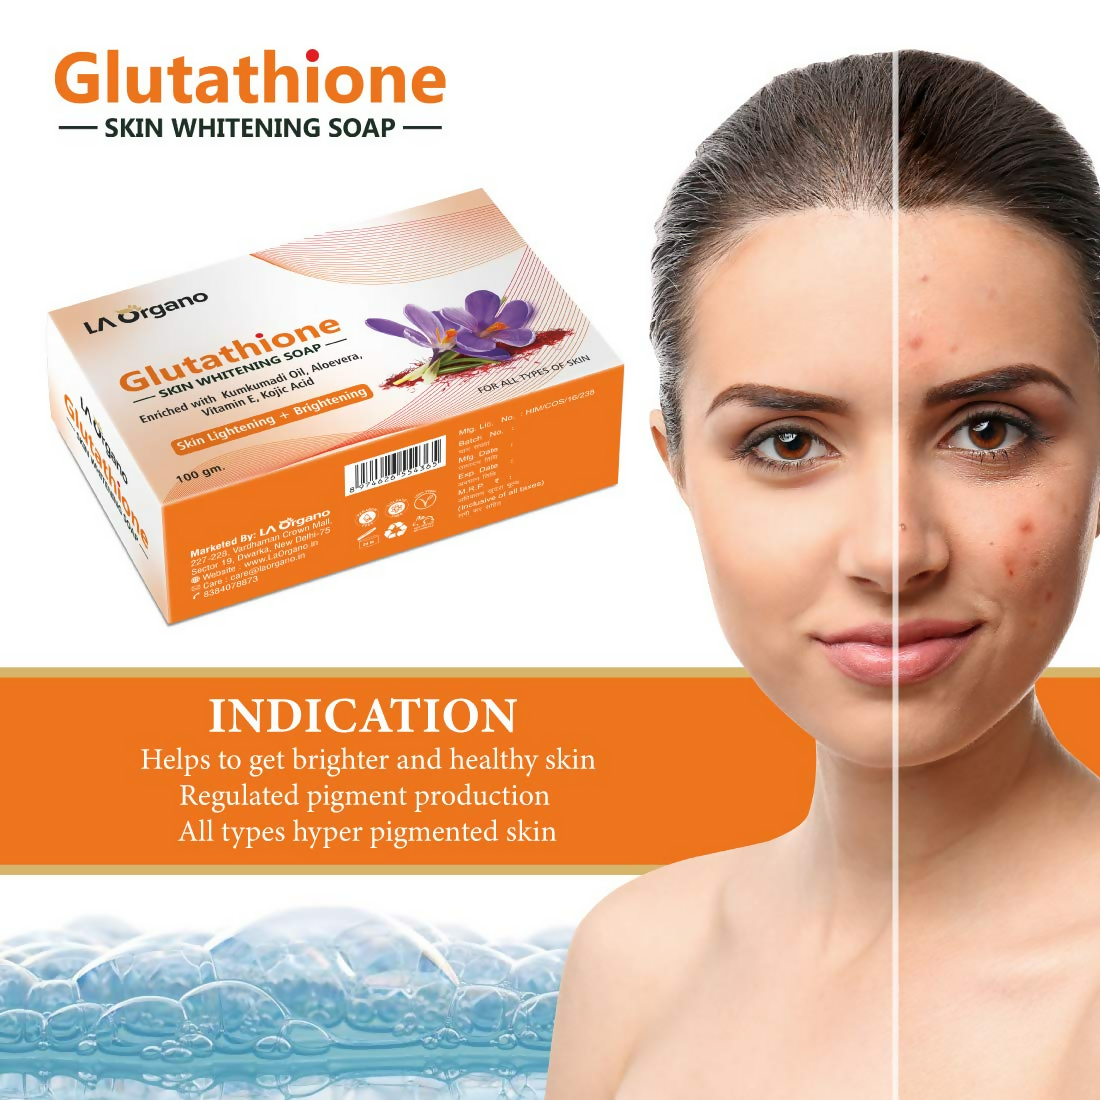 LA Organo Glutathione Kumkumadi Skin Lightening & Brightening Soap